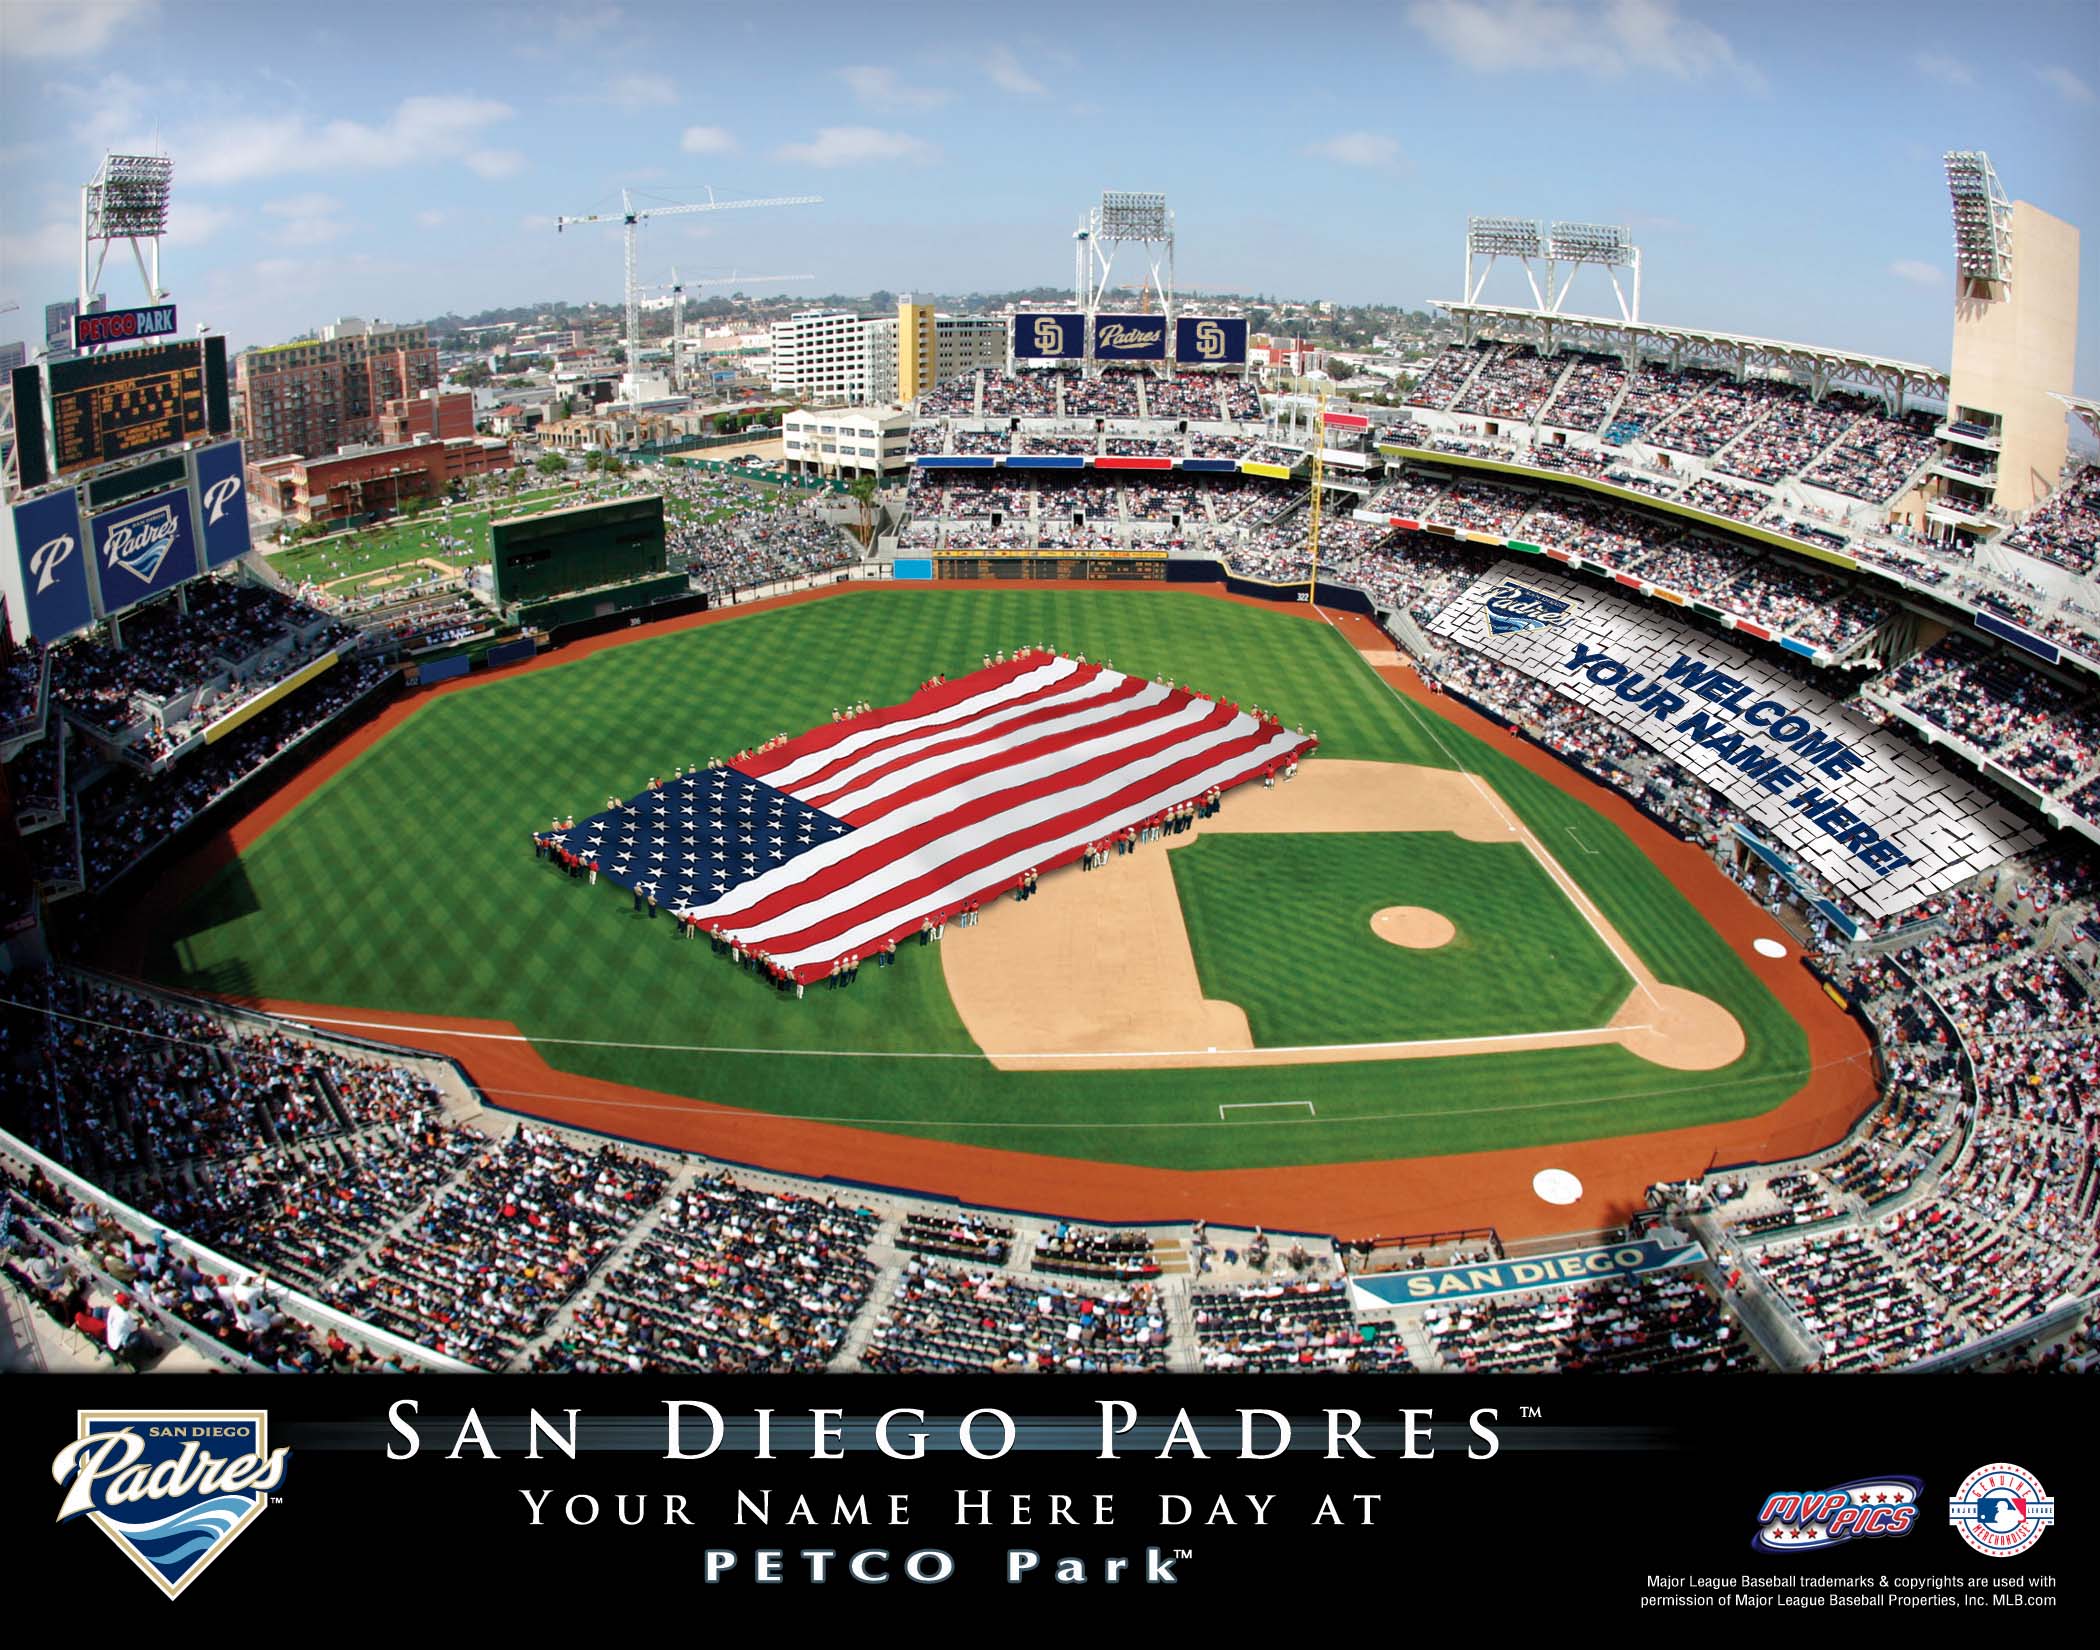 Download San Diego Padres Baseball Team Wallpaper